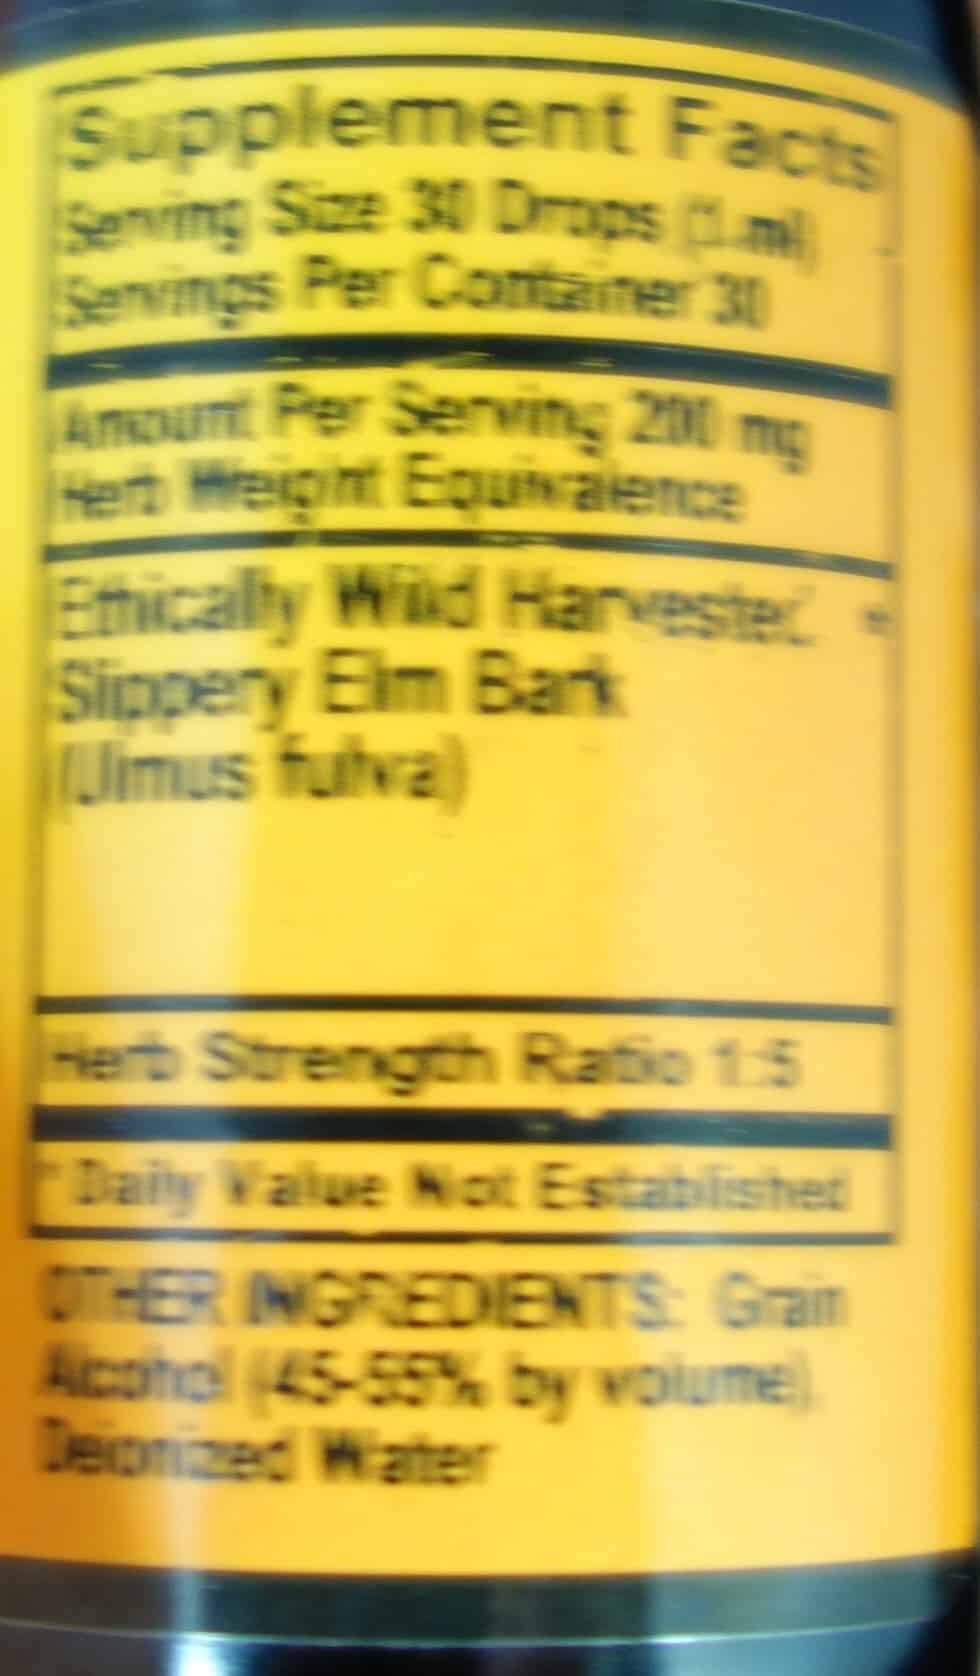 Betsy_s Basics Slippery Elm Liquid Extract Supplement Facts